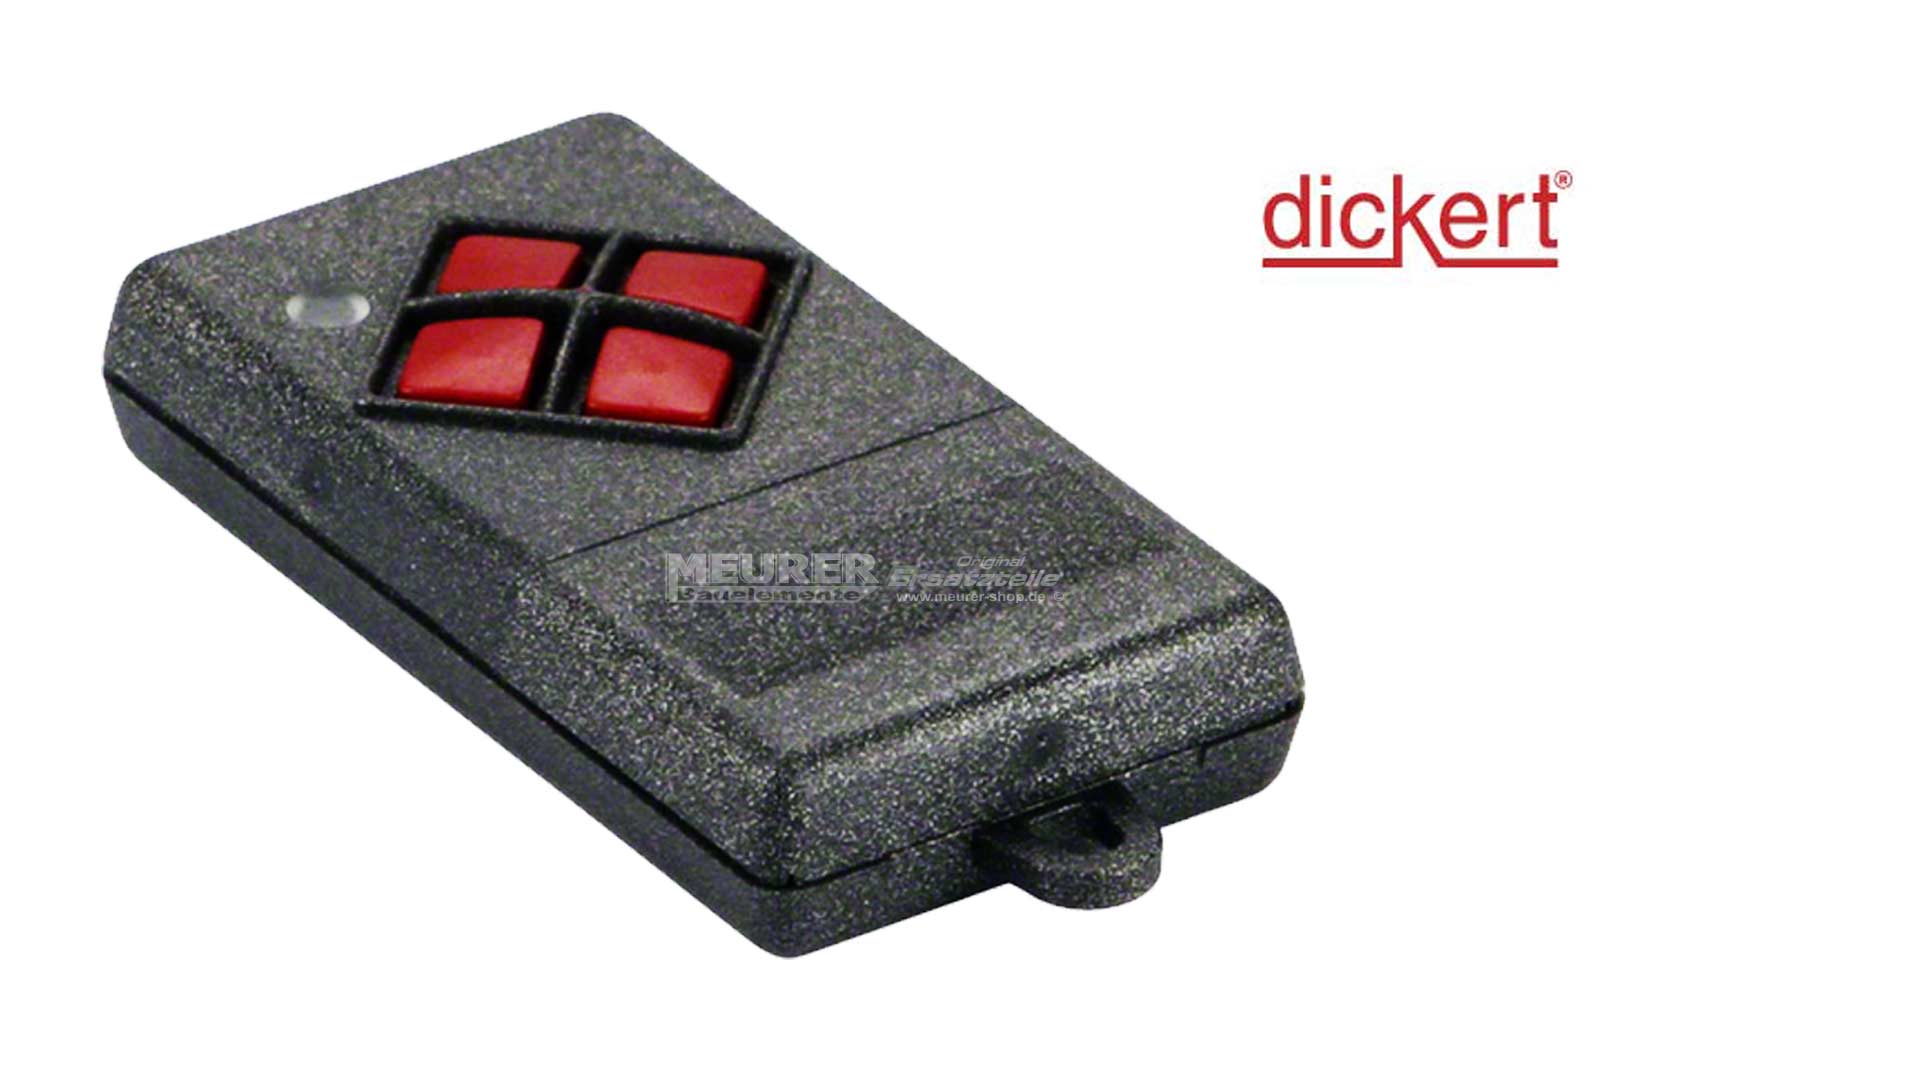 Dickert Mini Handsender 4-Kanal S10-868A4L00 Funk Fernsteuerung Tor Antrieb Tore 